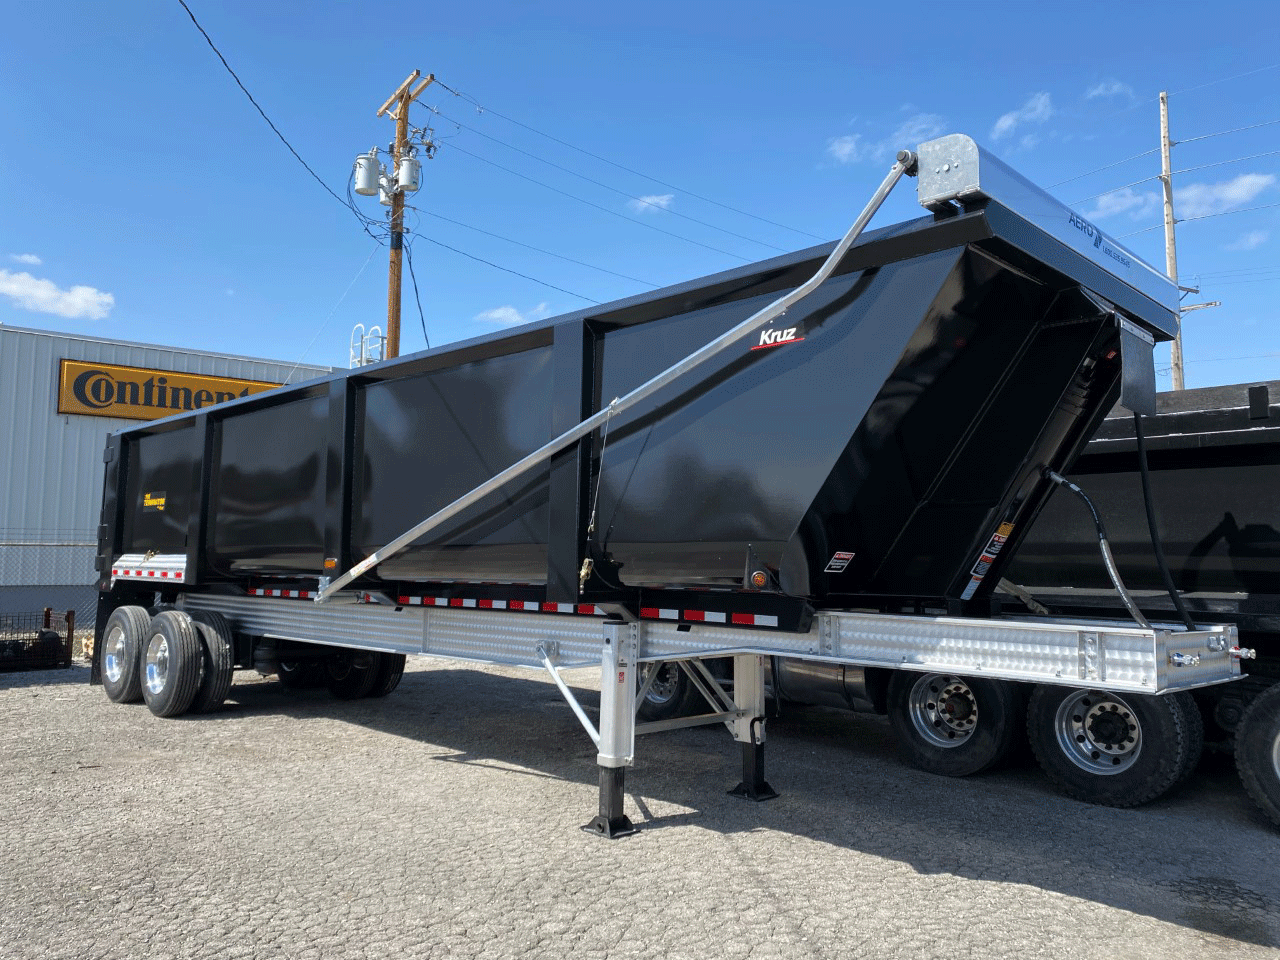 1280x960-black-trailer.png